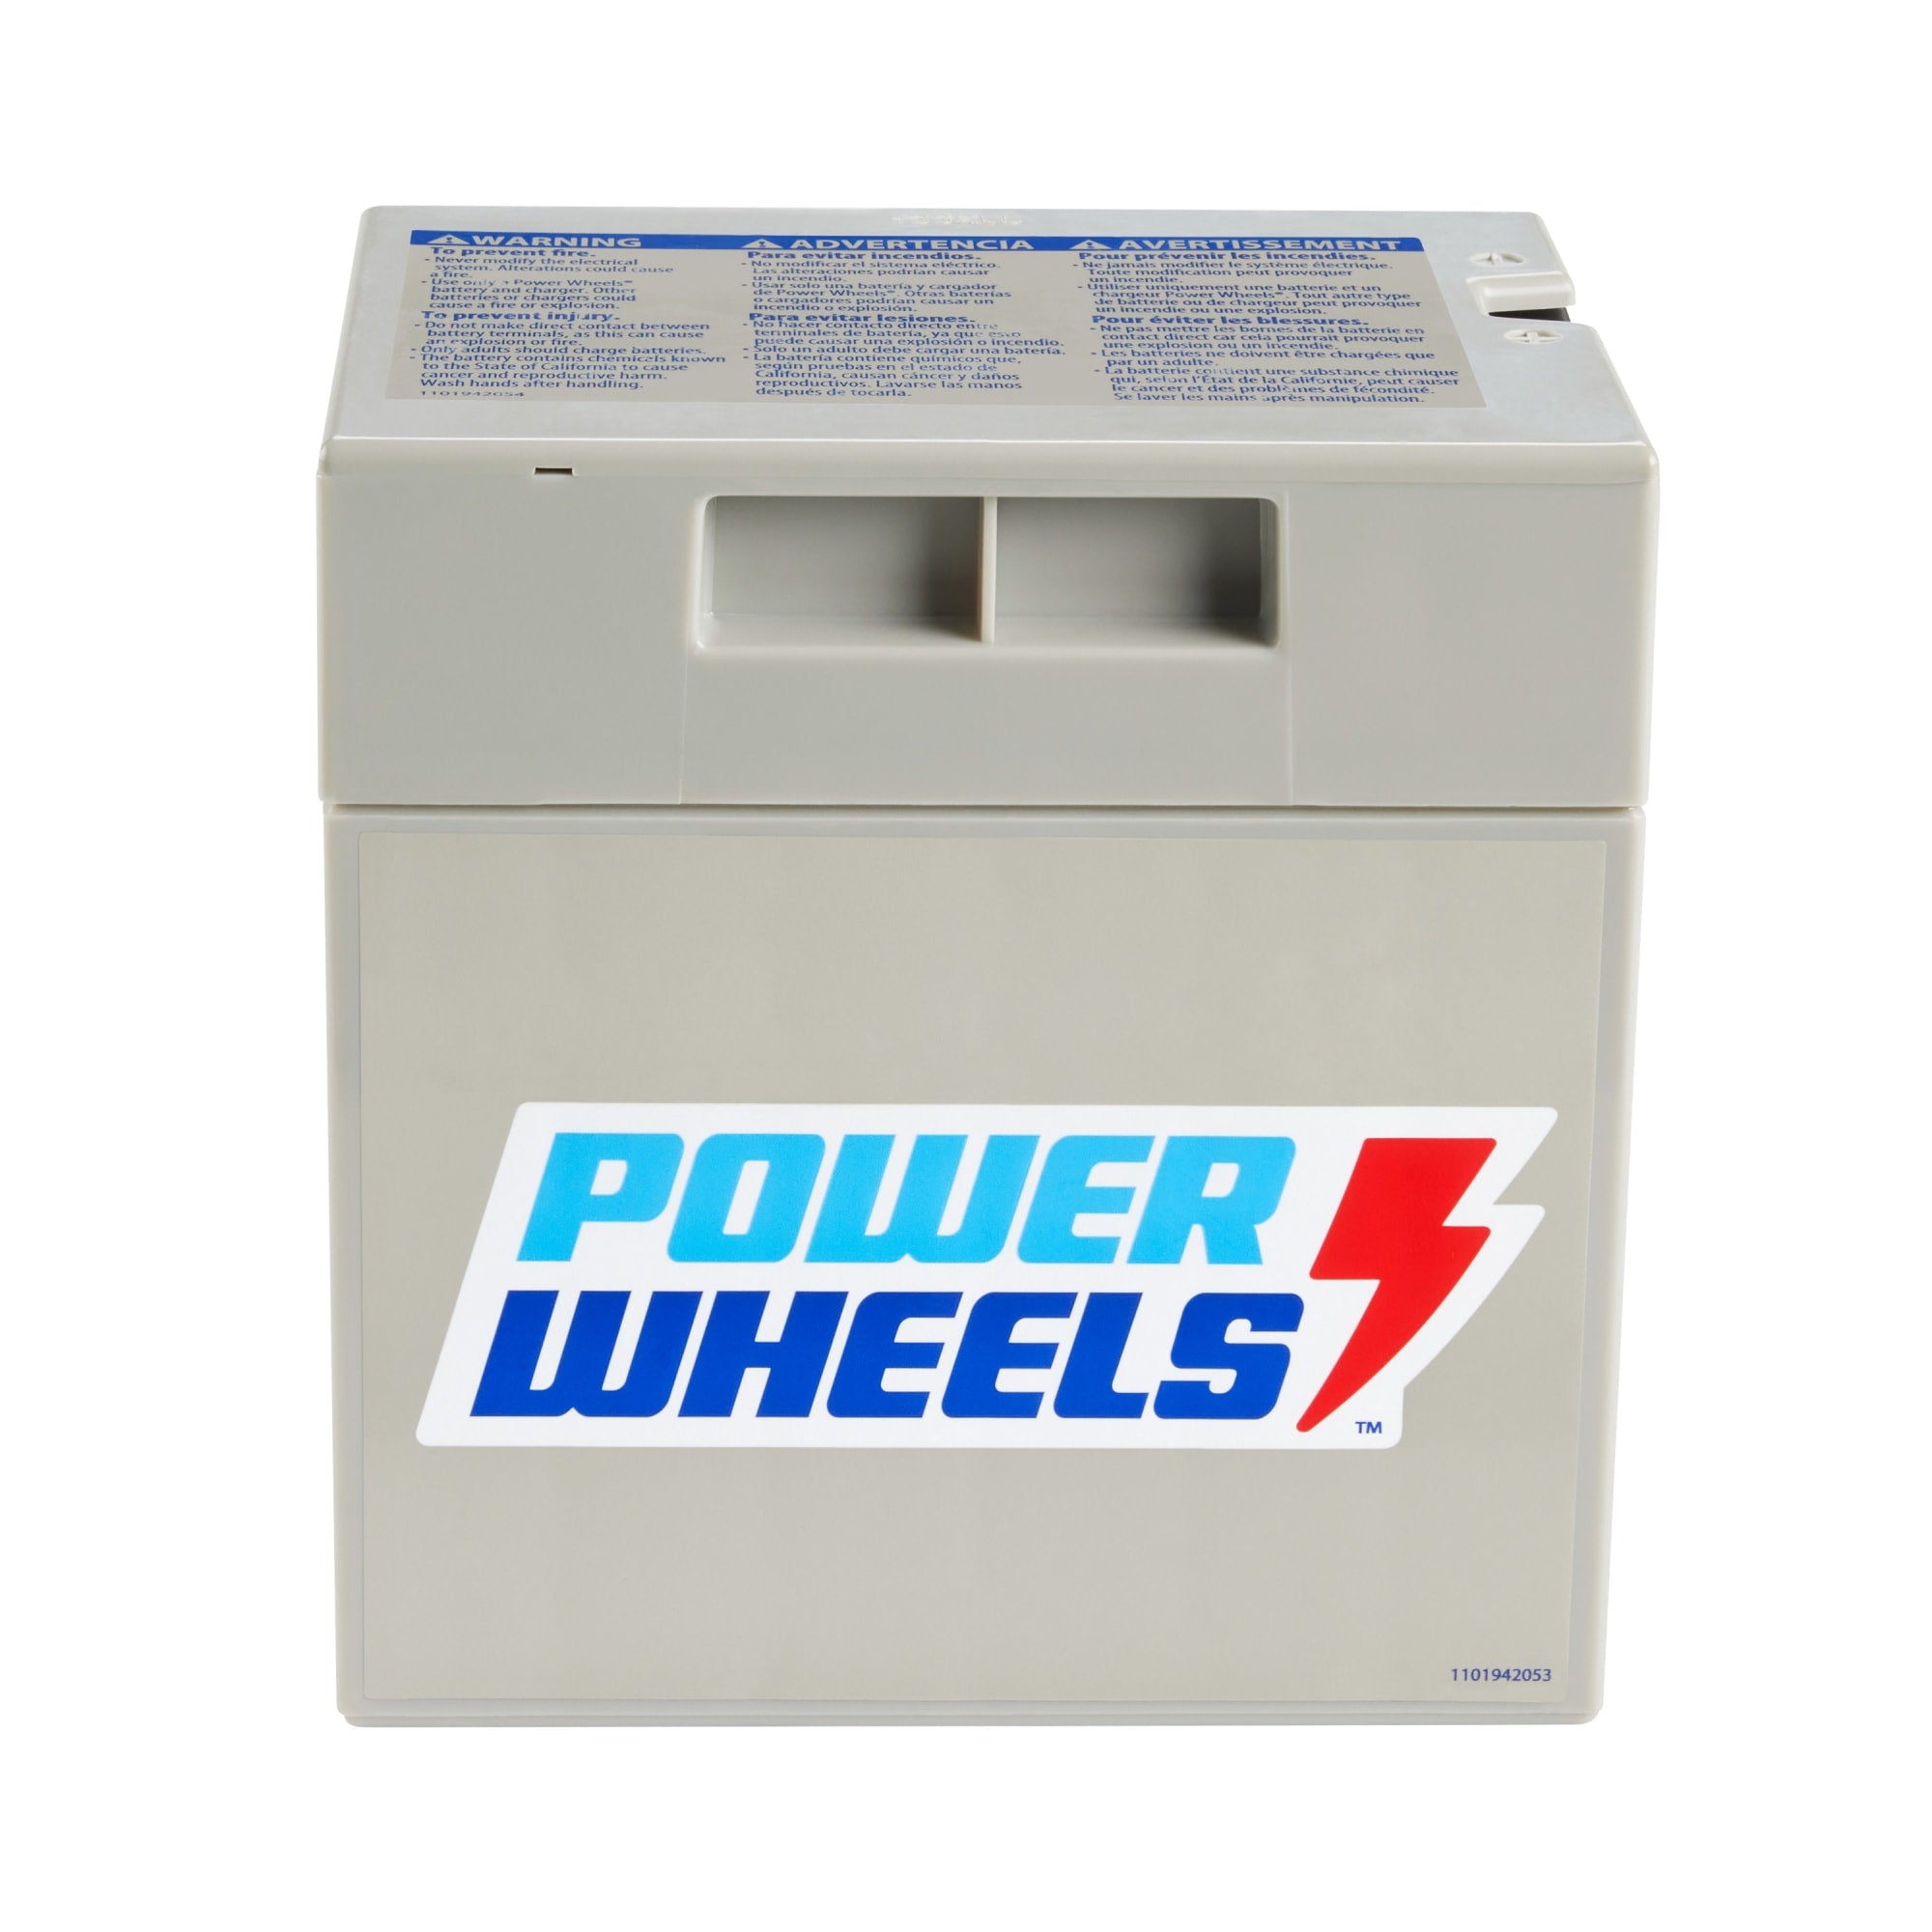 Power Wheels Power Wheels 12-Volt Rechargeable Battery | Mattel